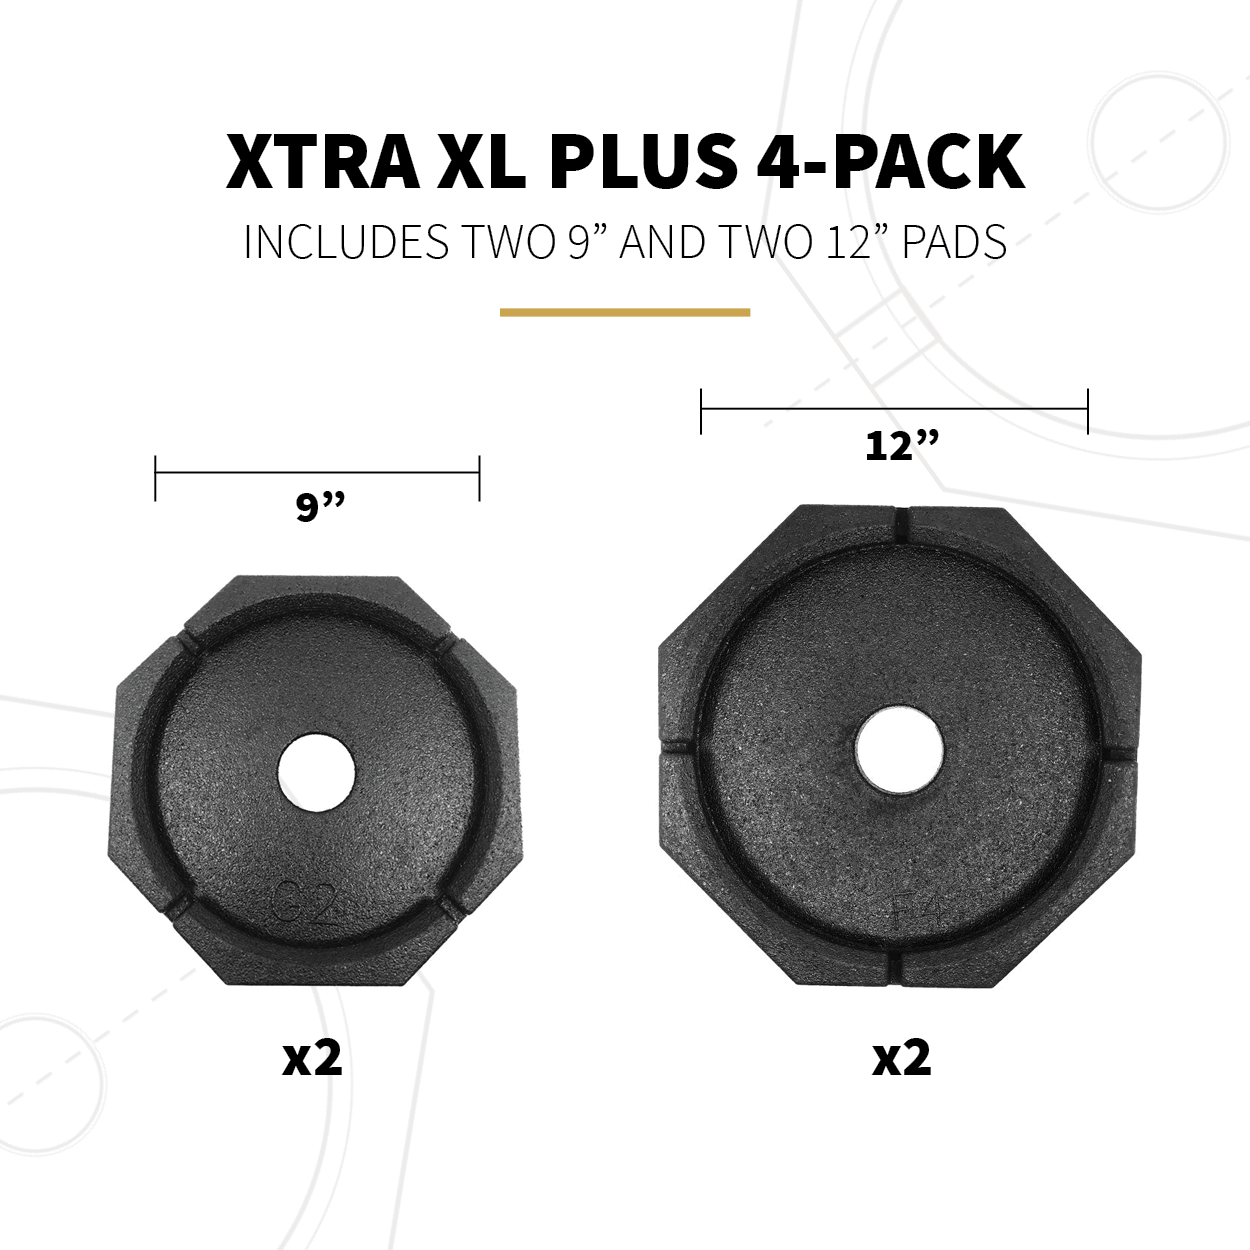 XTRA XL Plus 4-Pack Specs